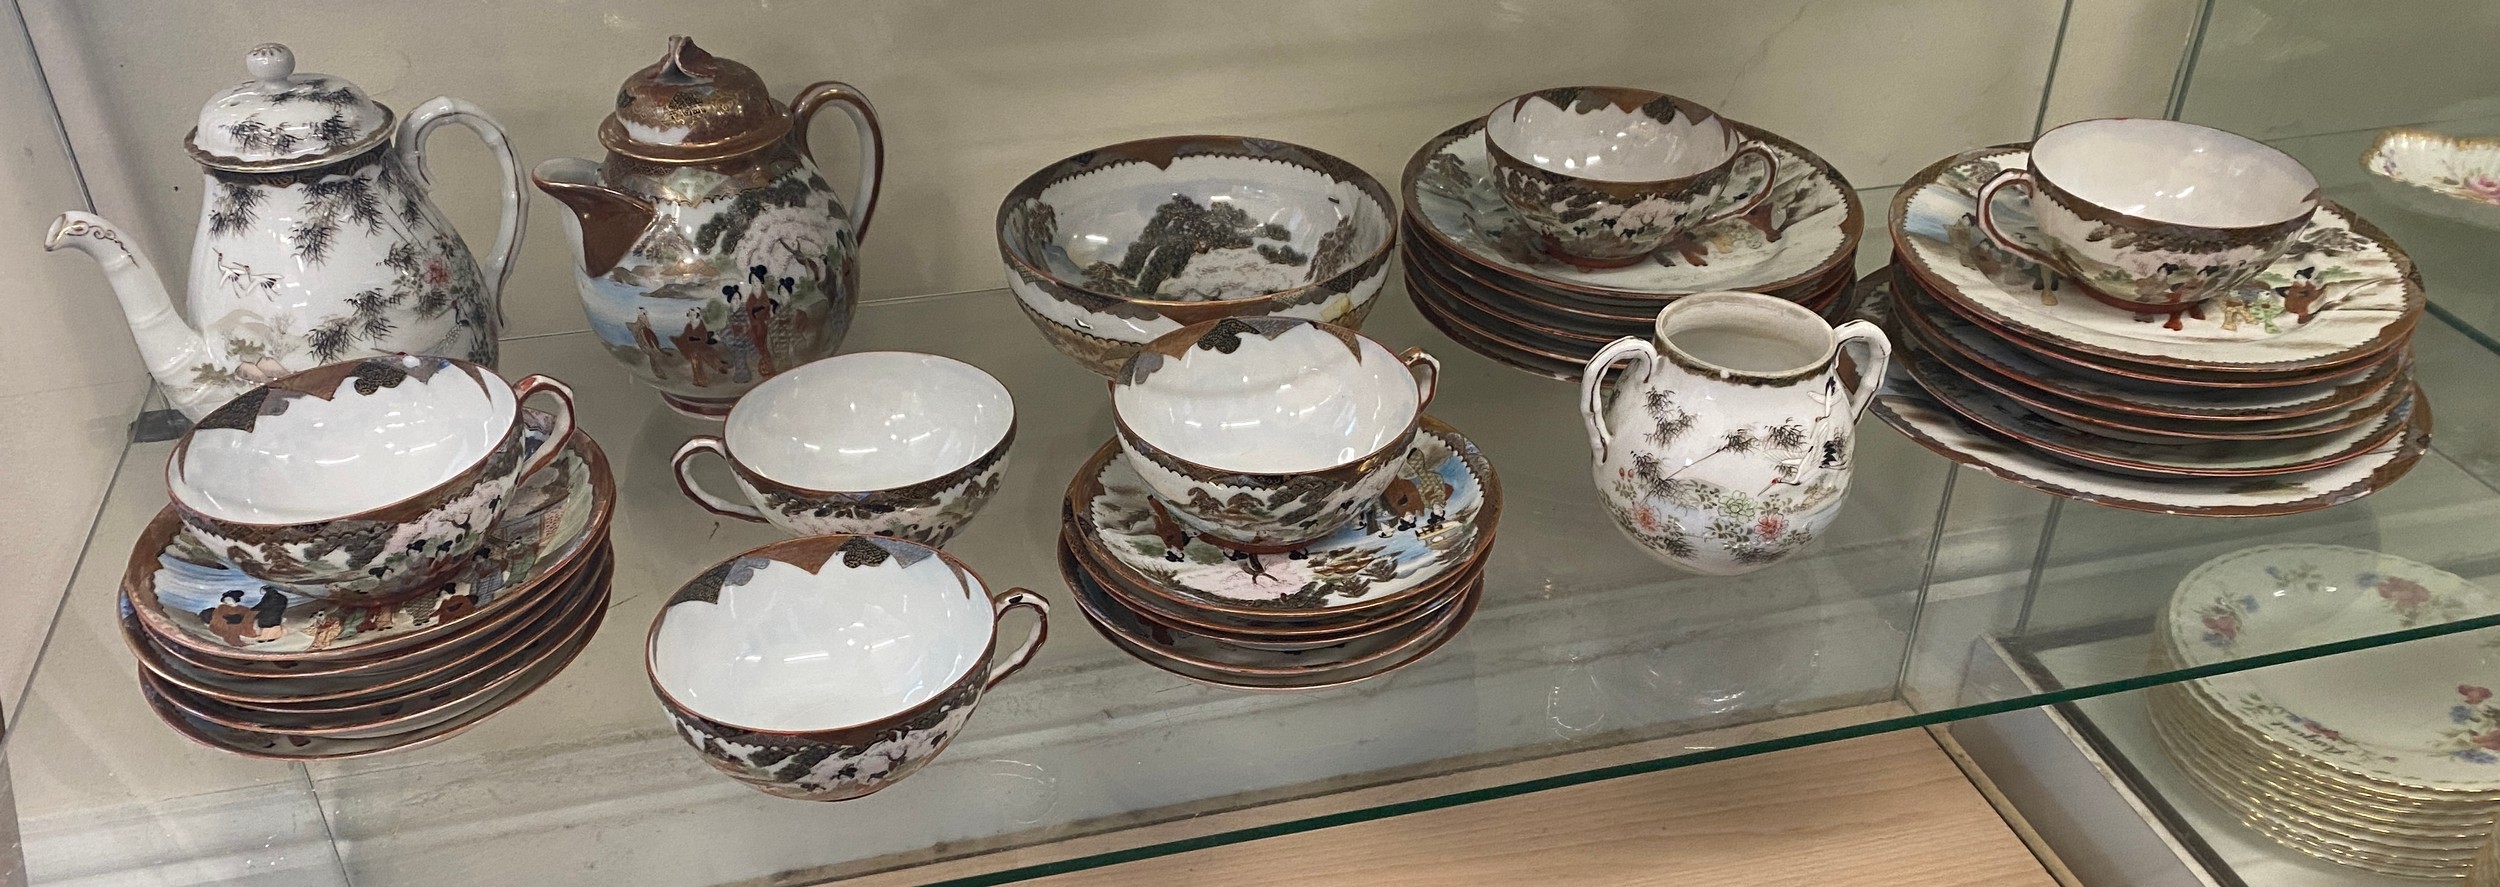 Vintage Japanese eggshell part tea service to include teapot, cups, saucers jug etc